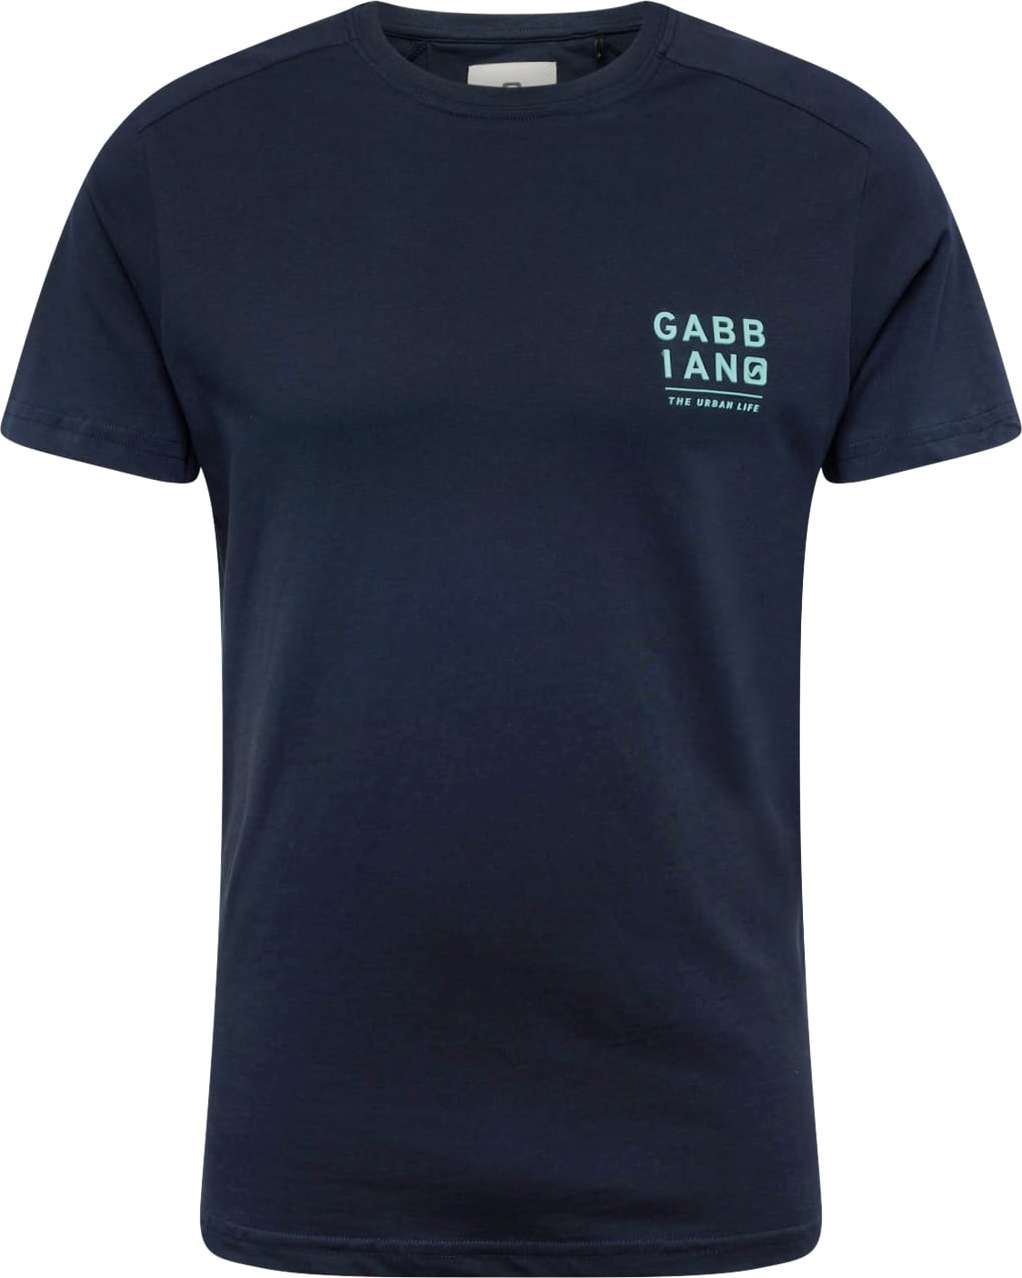 Tričko Gabbiano námořnická modř / nefritová / bílá